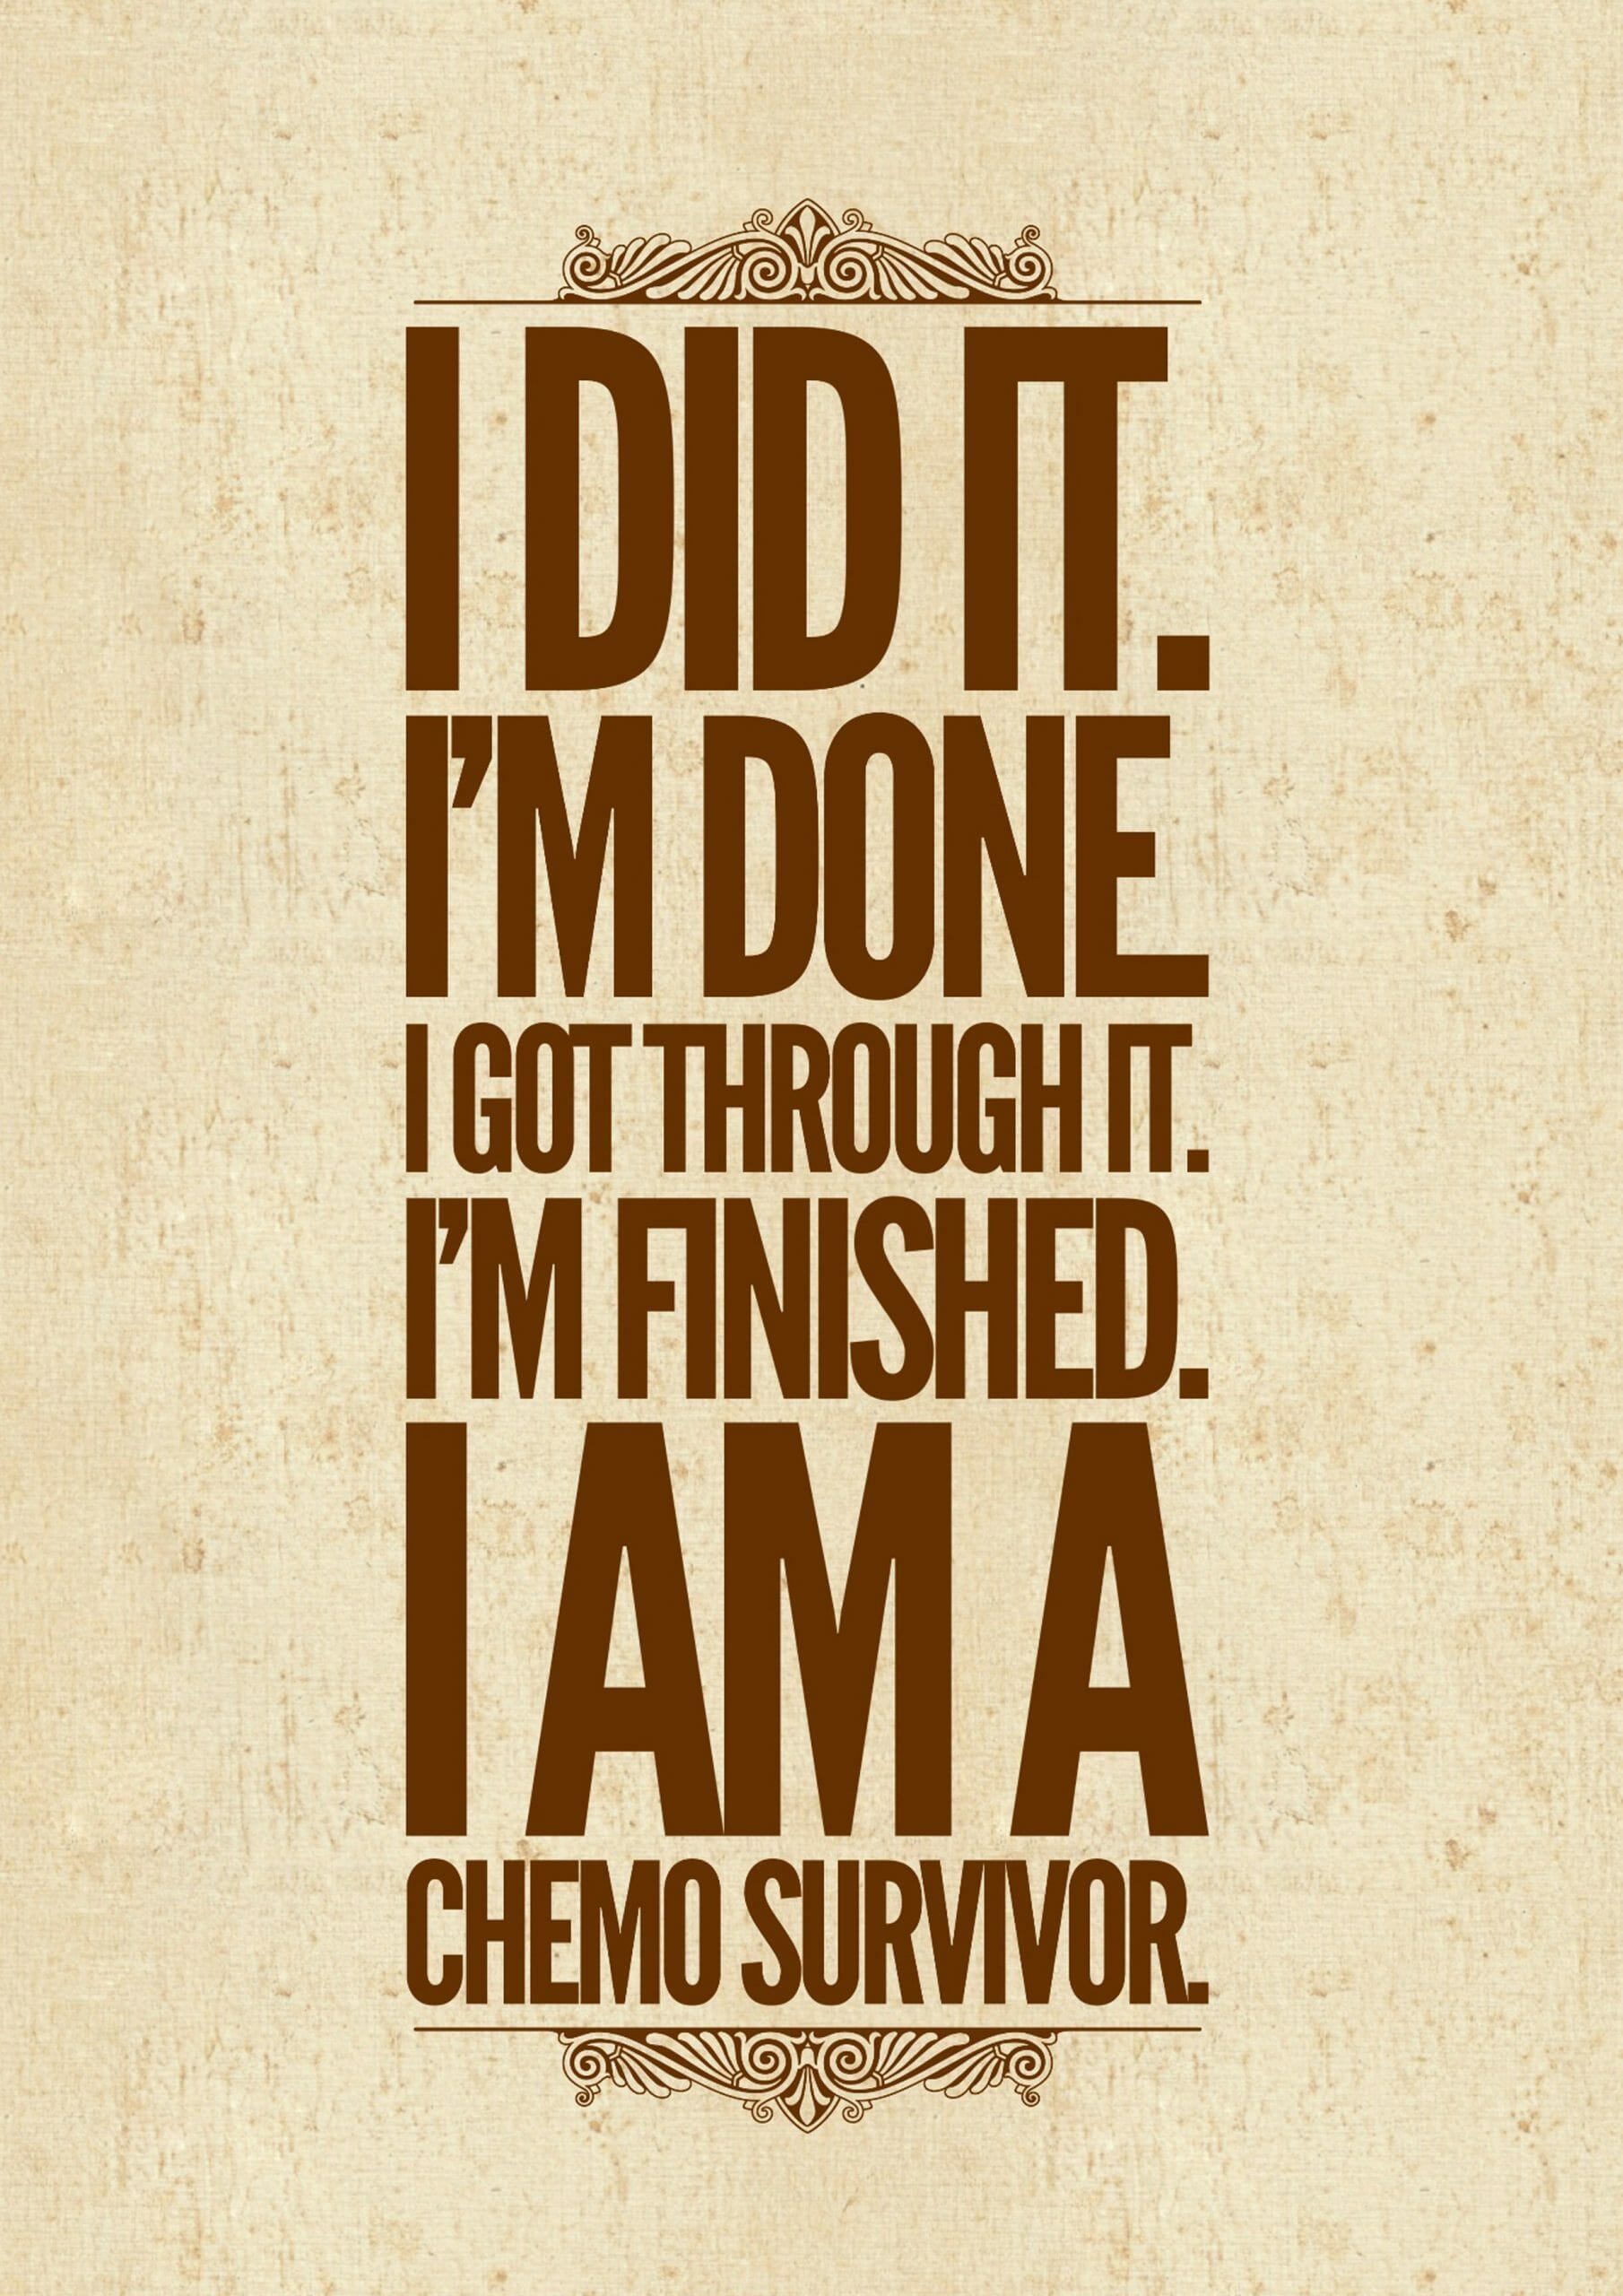 I did it, I'm done. I got through it. I finished. I'm a chemo survivor